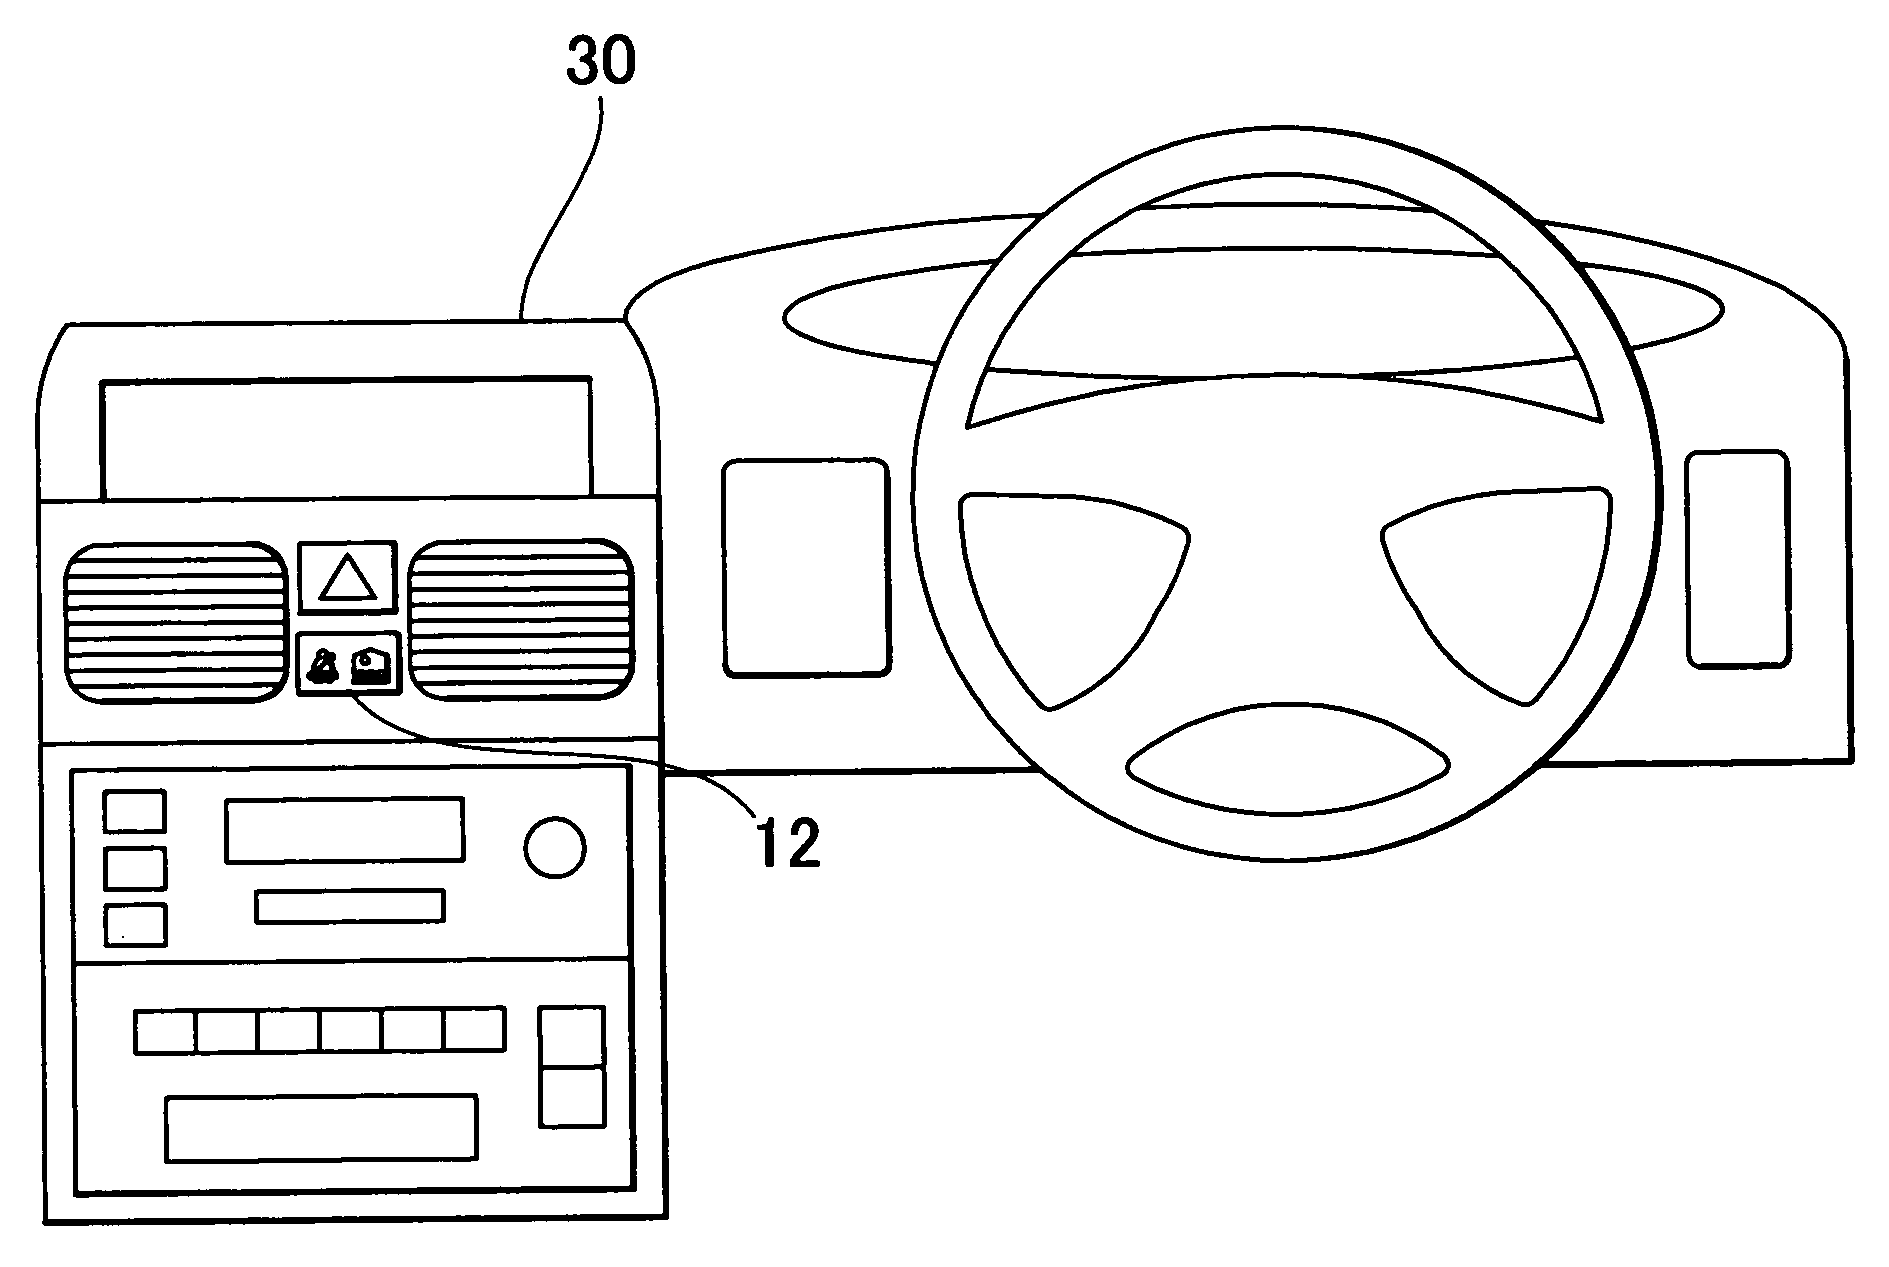 Seatbelt use indicating apparatus and method